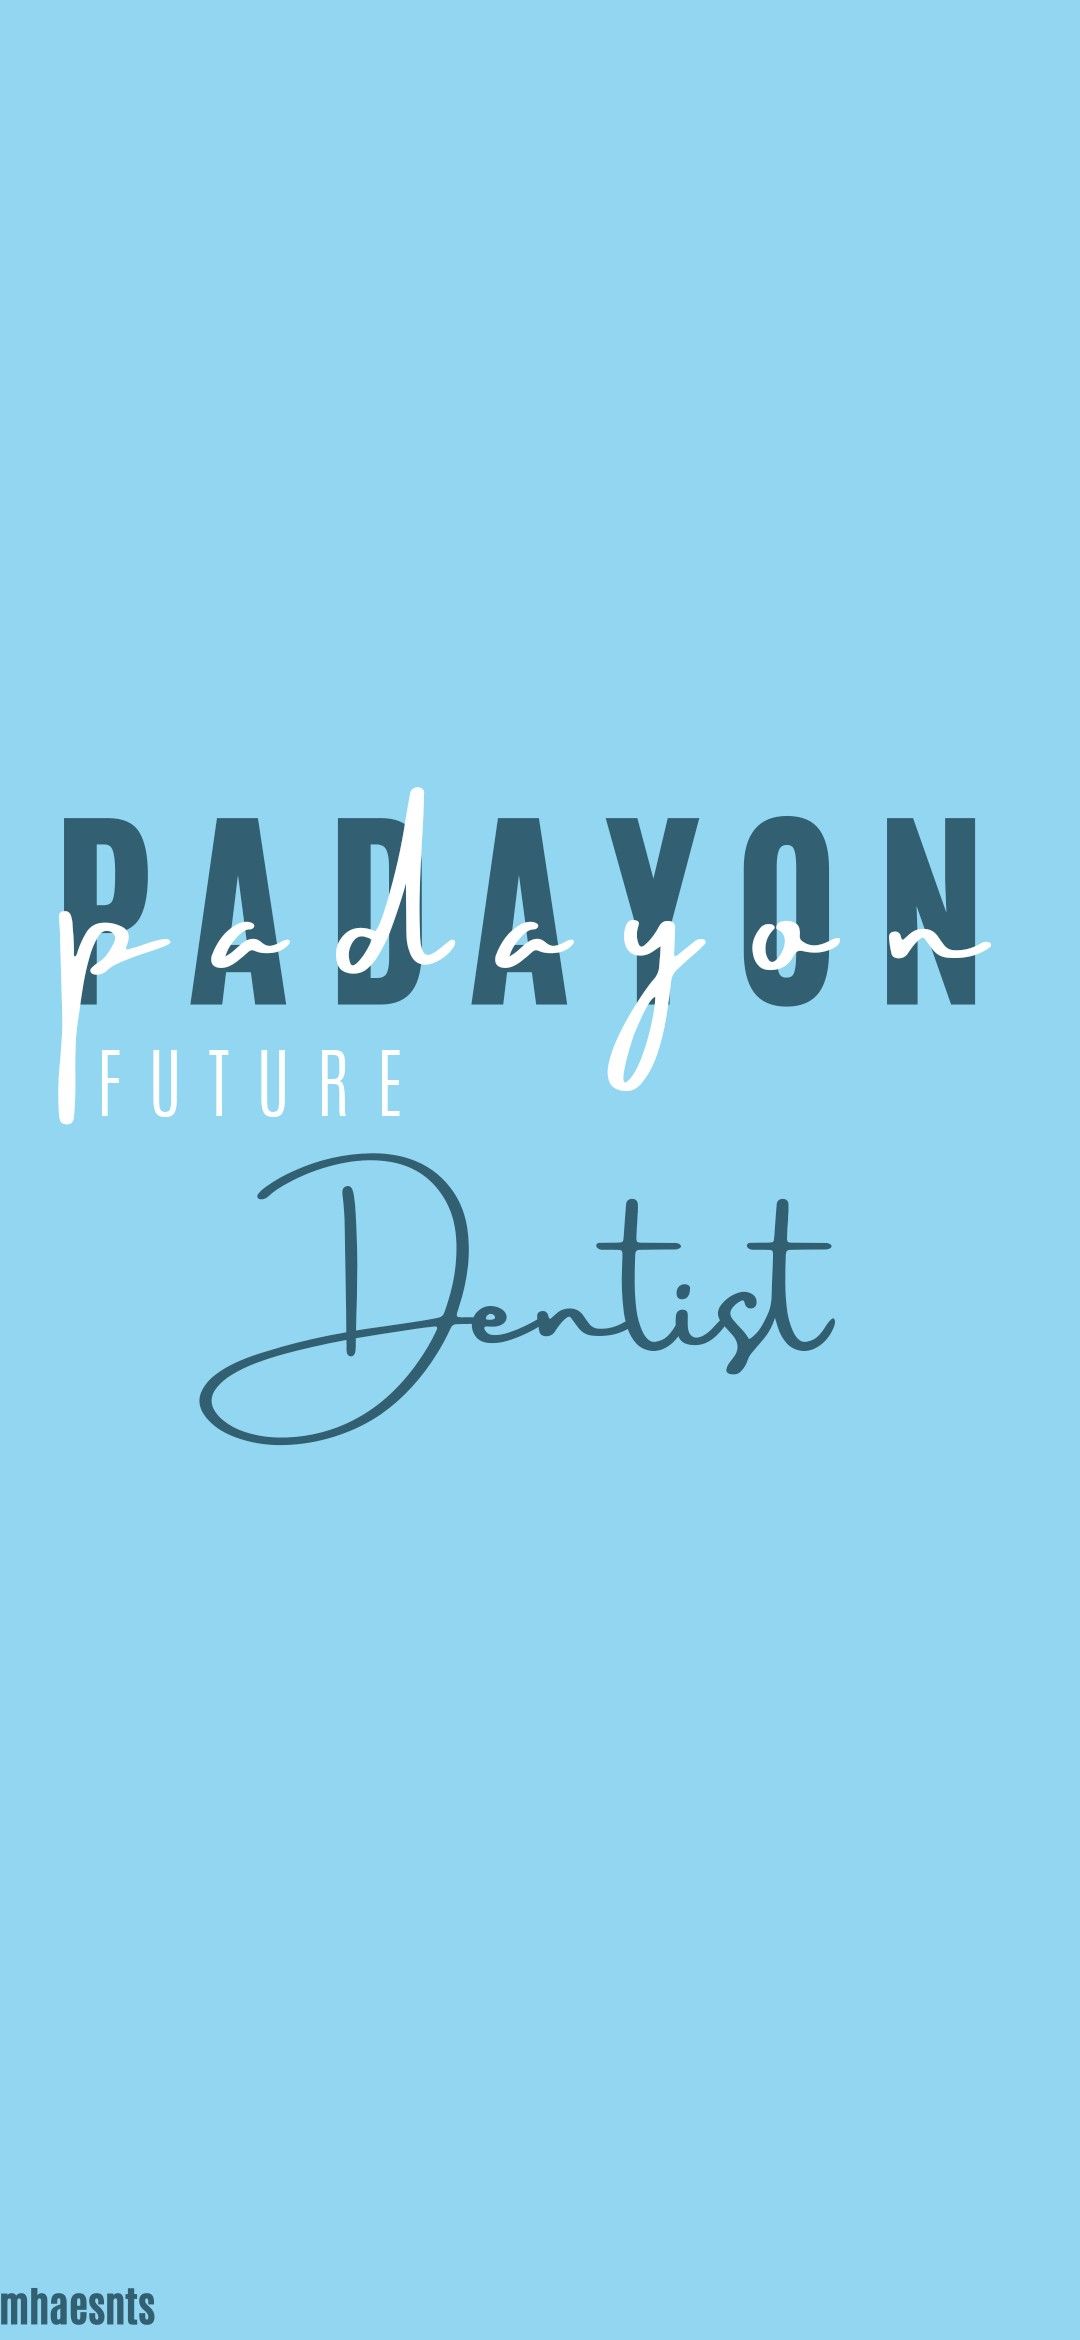 Padayon!!! Future Dentist. Padayon wallpaper aesthetic, Dentist, Lettering